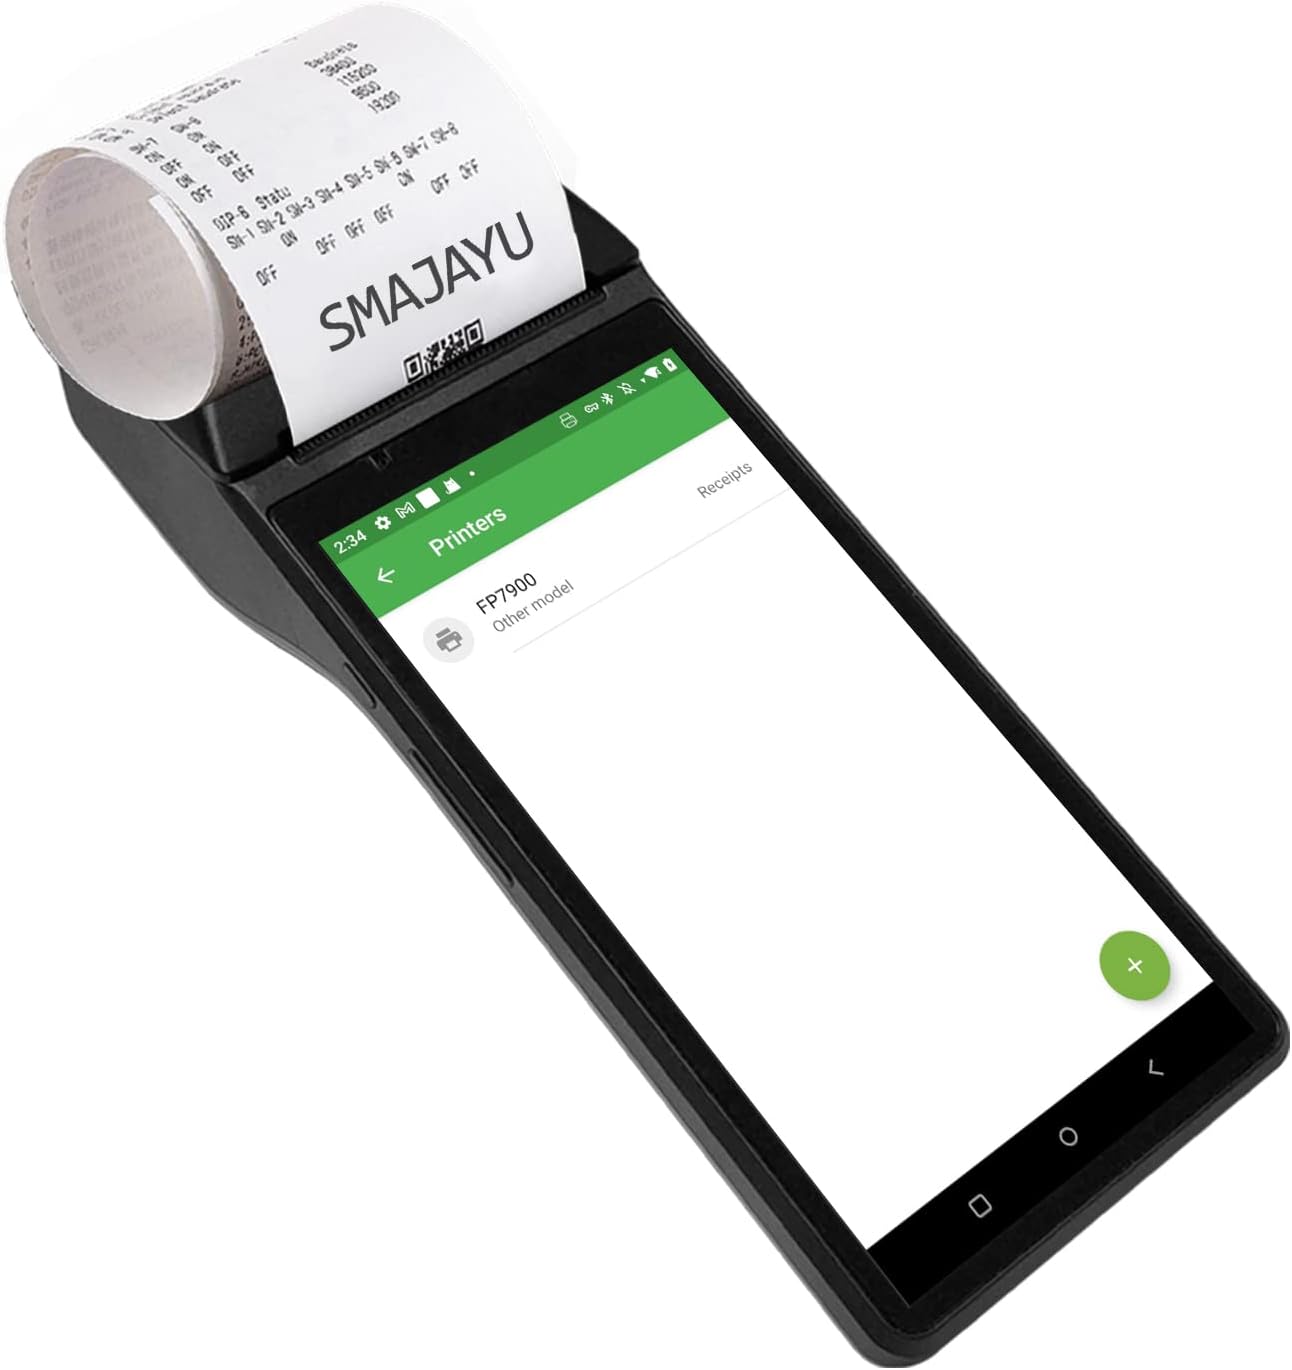 SMAJAYU Pos Terminal Receipt Printer Android 10 Handheld Mobile